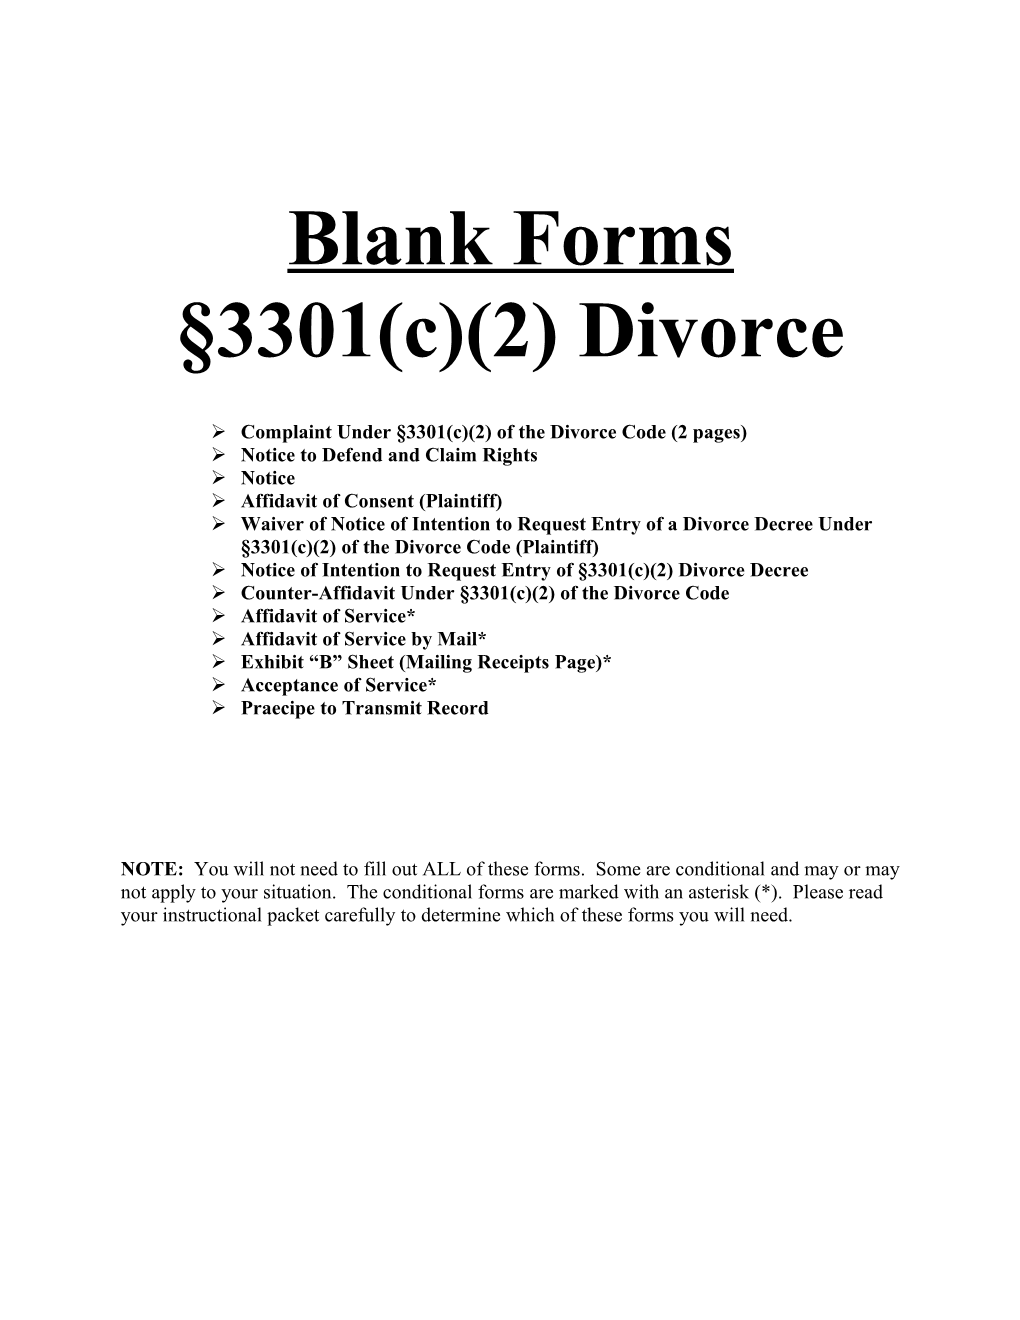 Ø Complaint Under 3301(C)(2) of the Divorce Code (2 Pages)